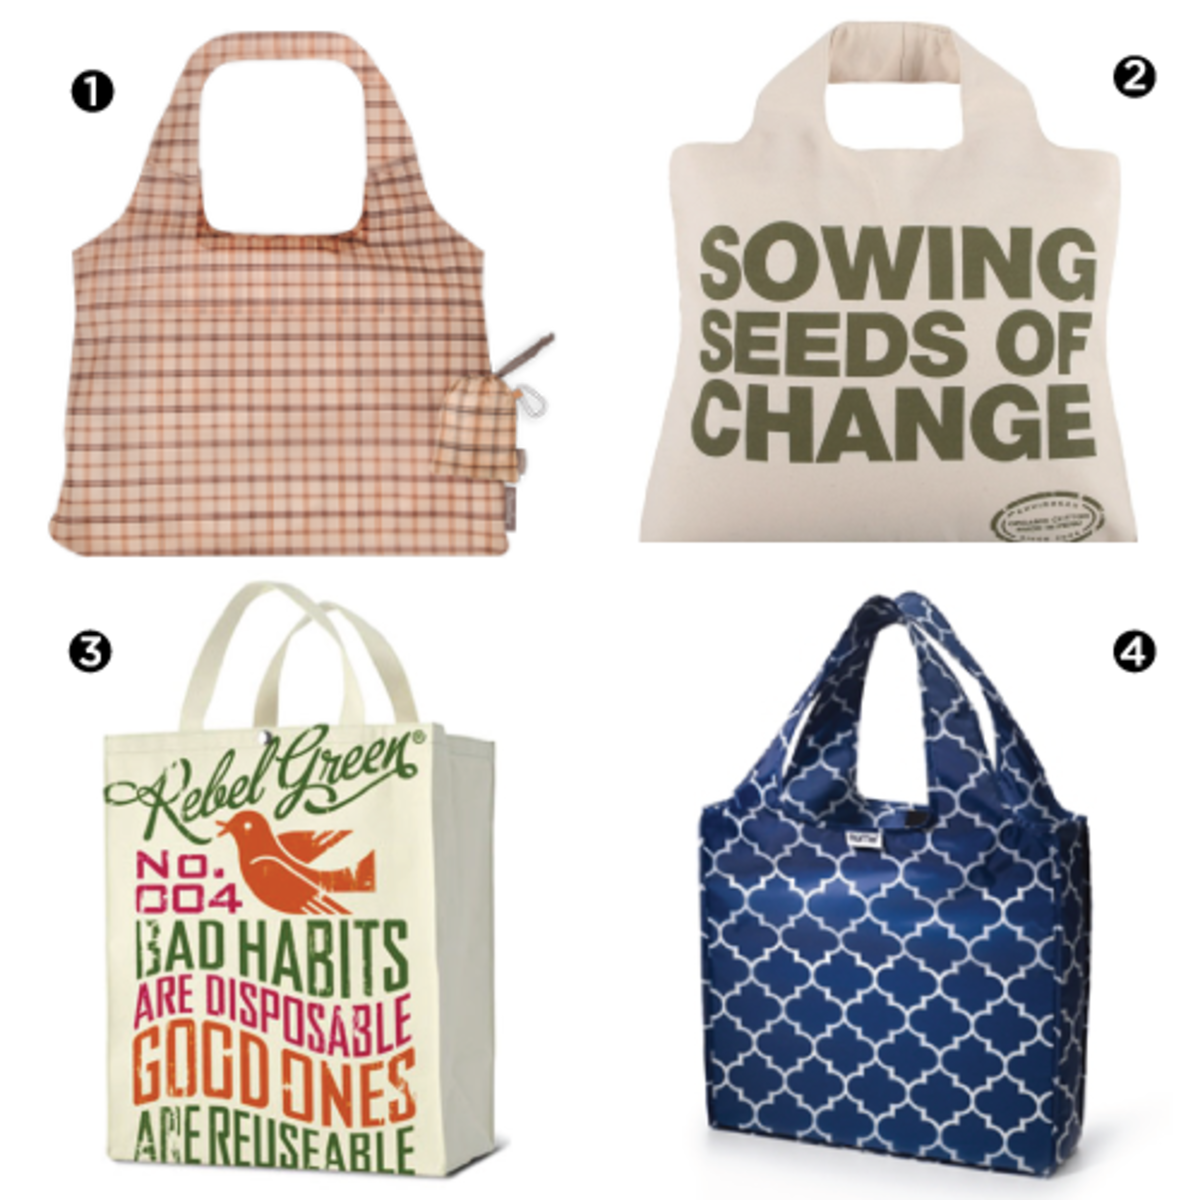 Eco-Bags